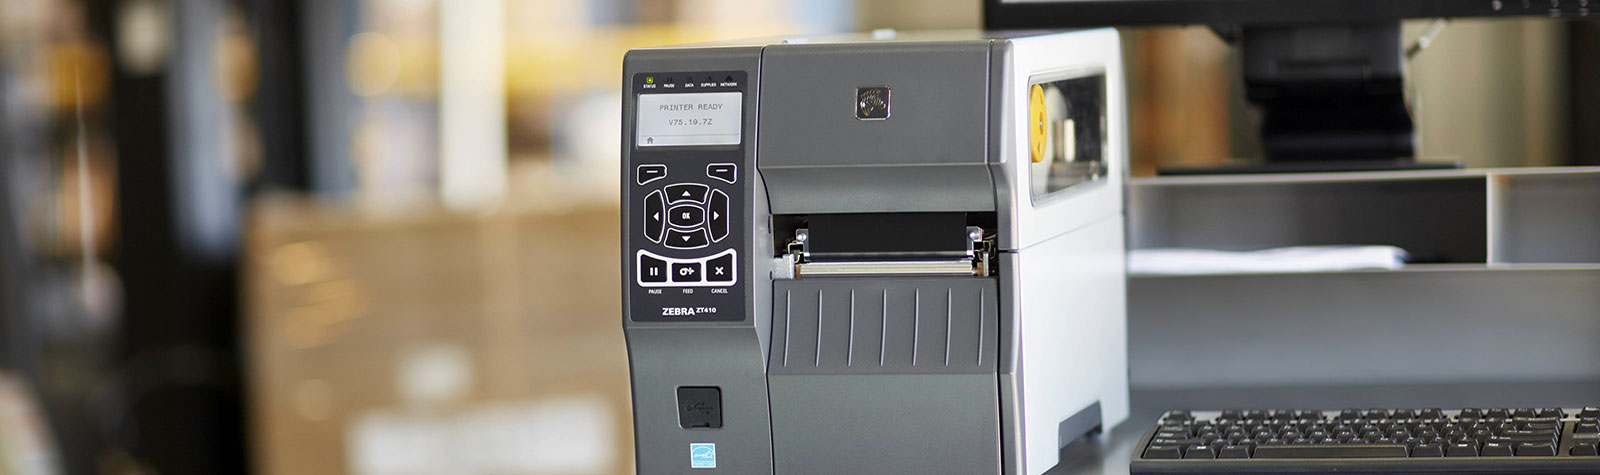 Zebra Rfid Printers Printing Hardware Ahearn And Soper 4581